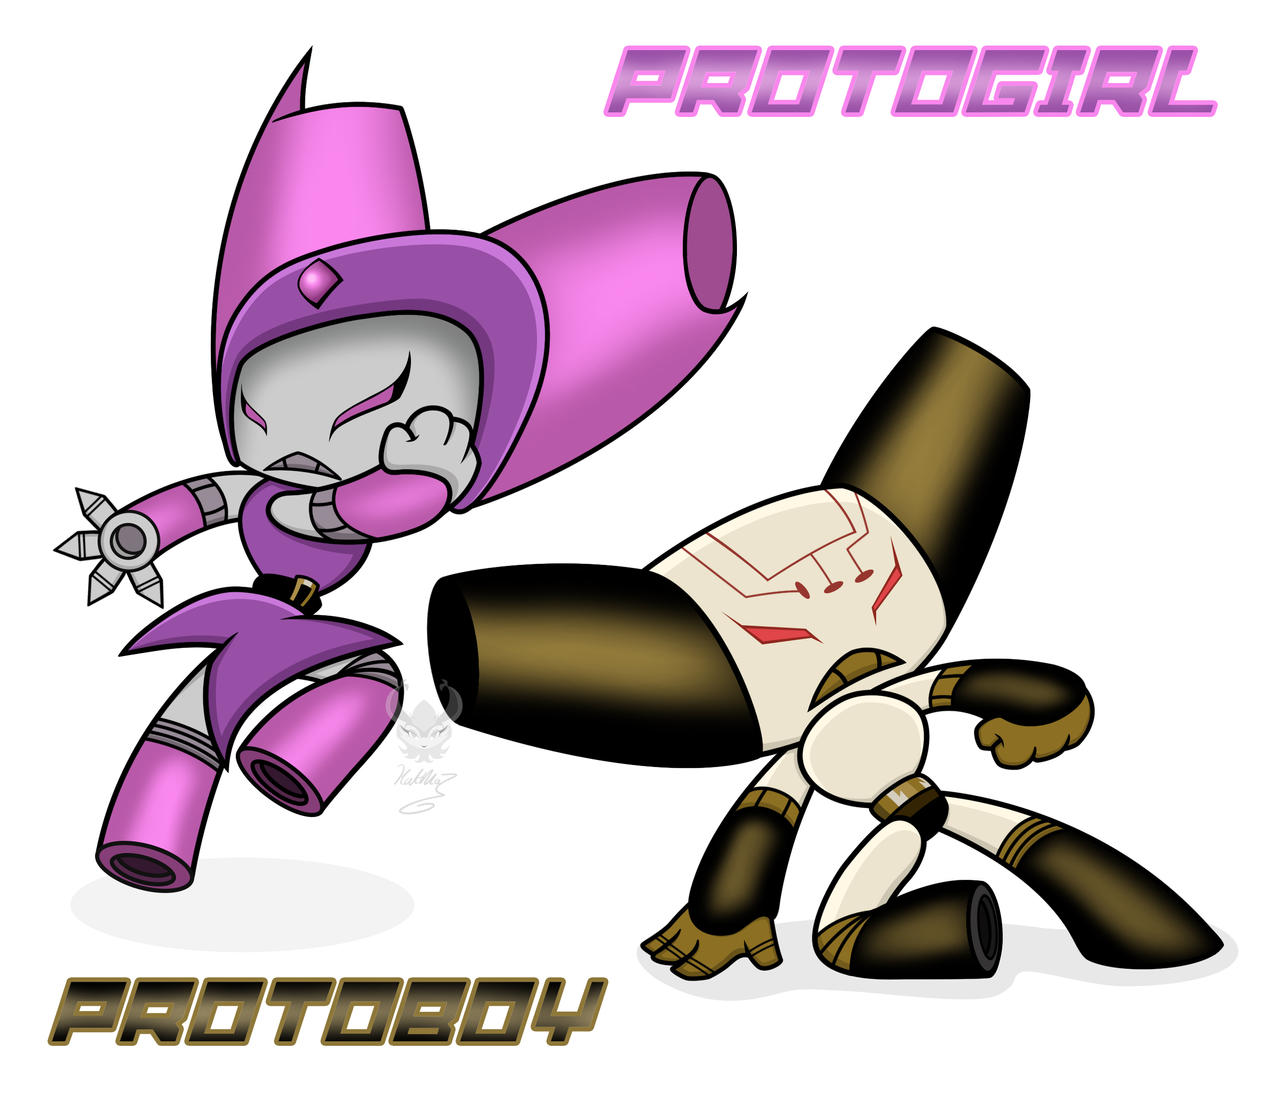 Protoboy by aztinos on DeviantArt